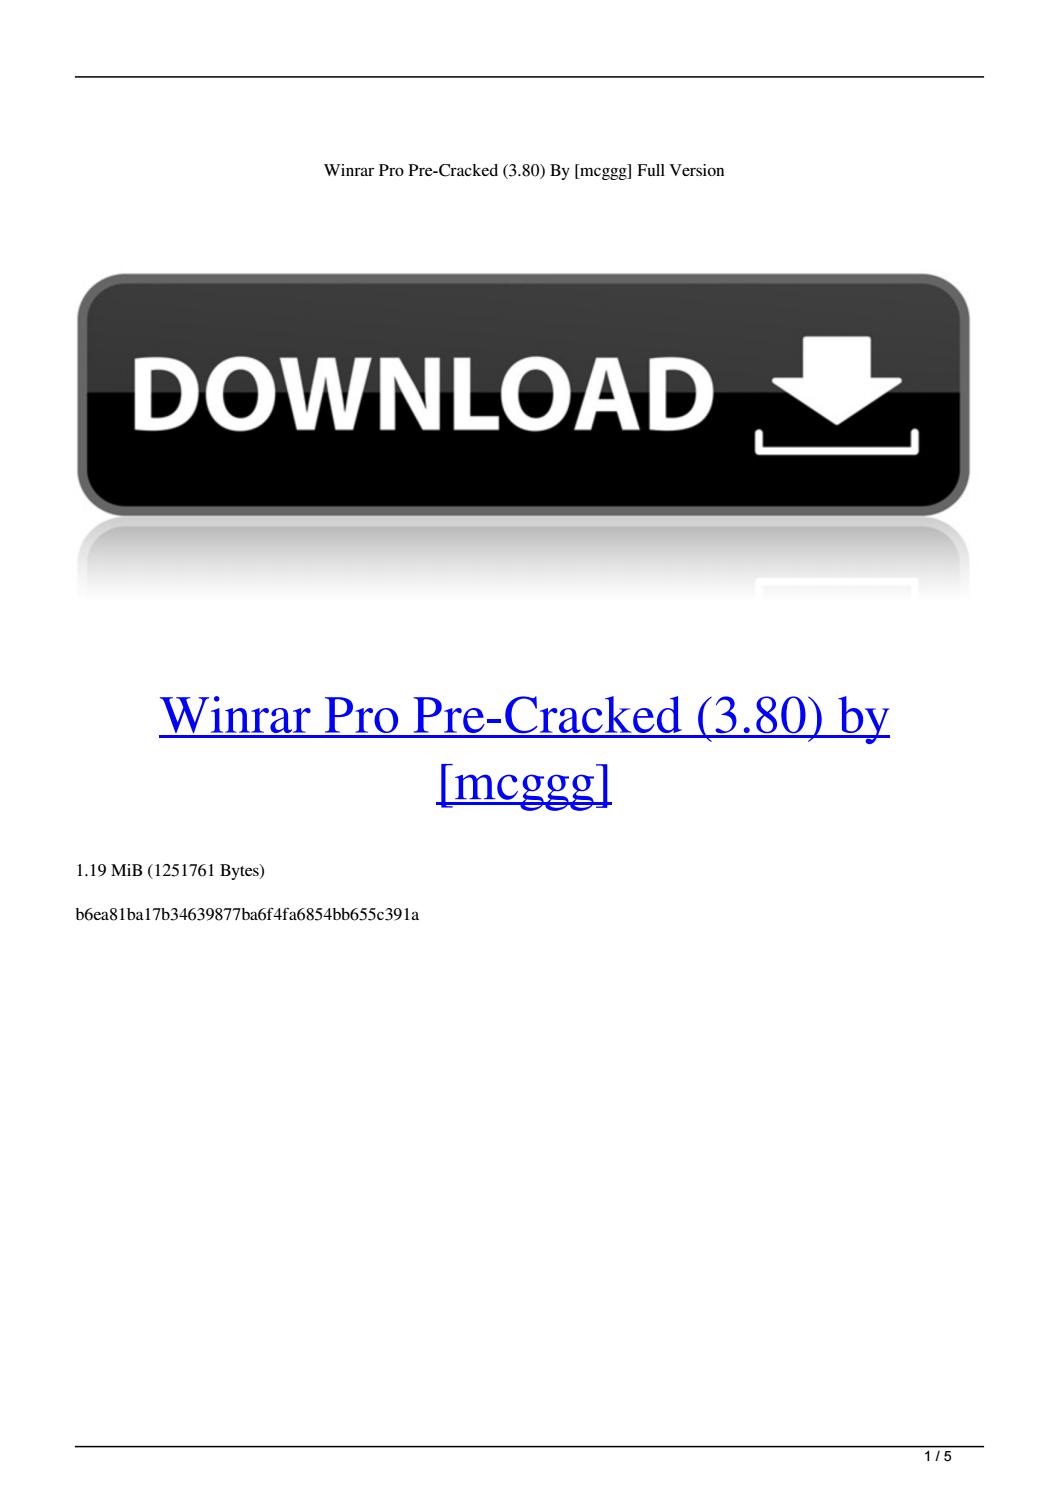 Winrar Crack Download Full Version